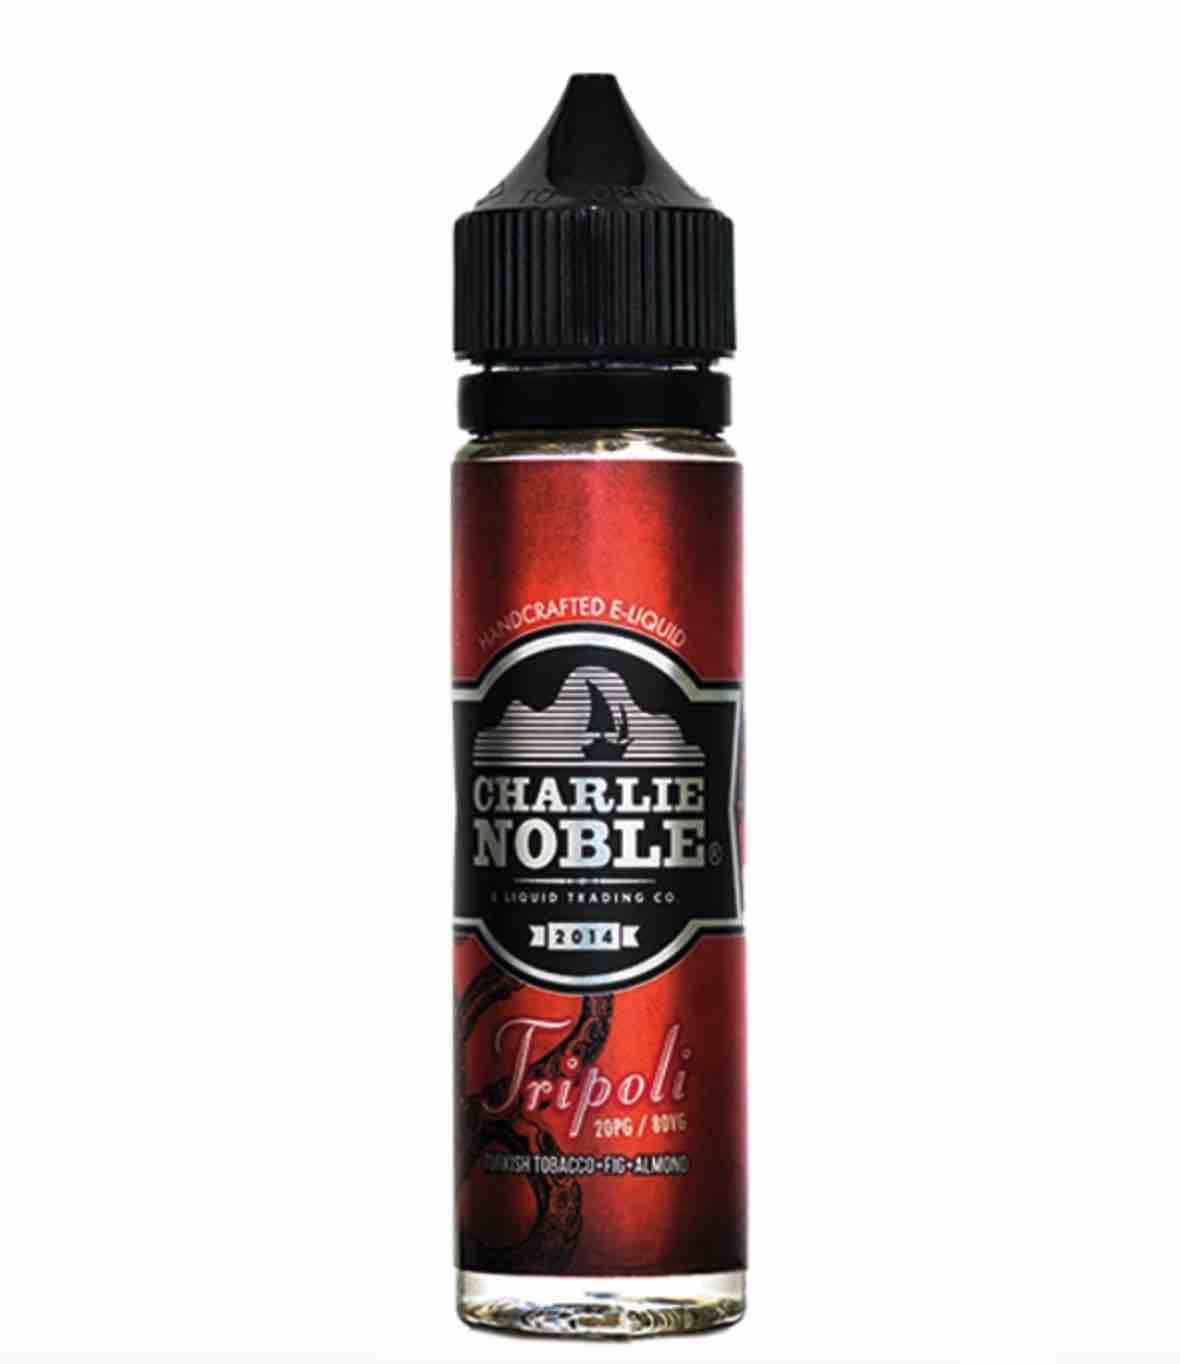 Charlie Noble Tripoli E-Juice